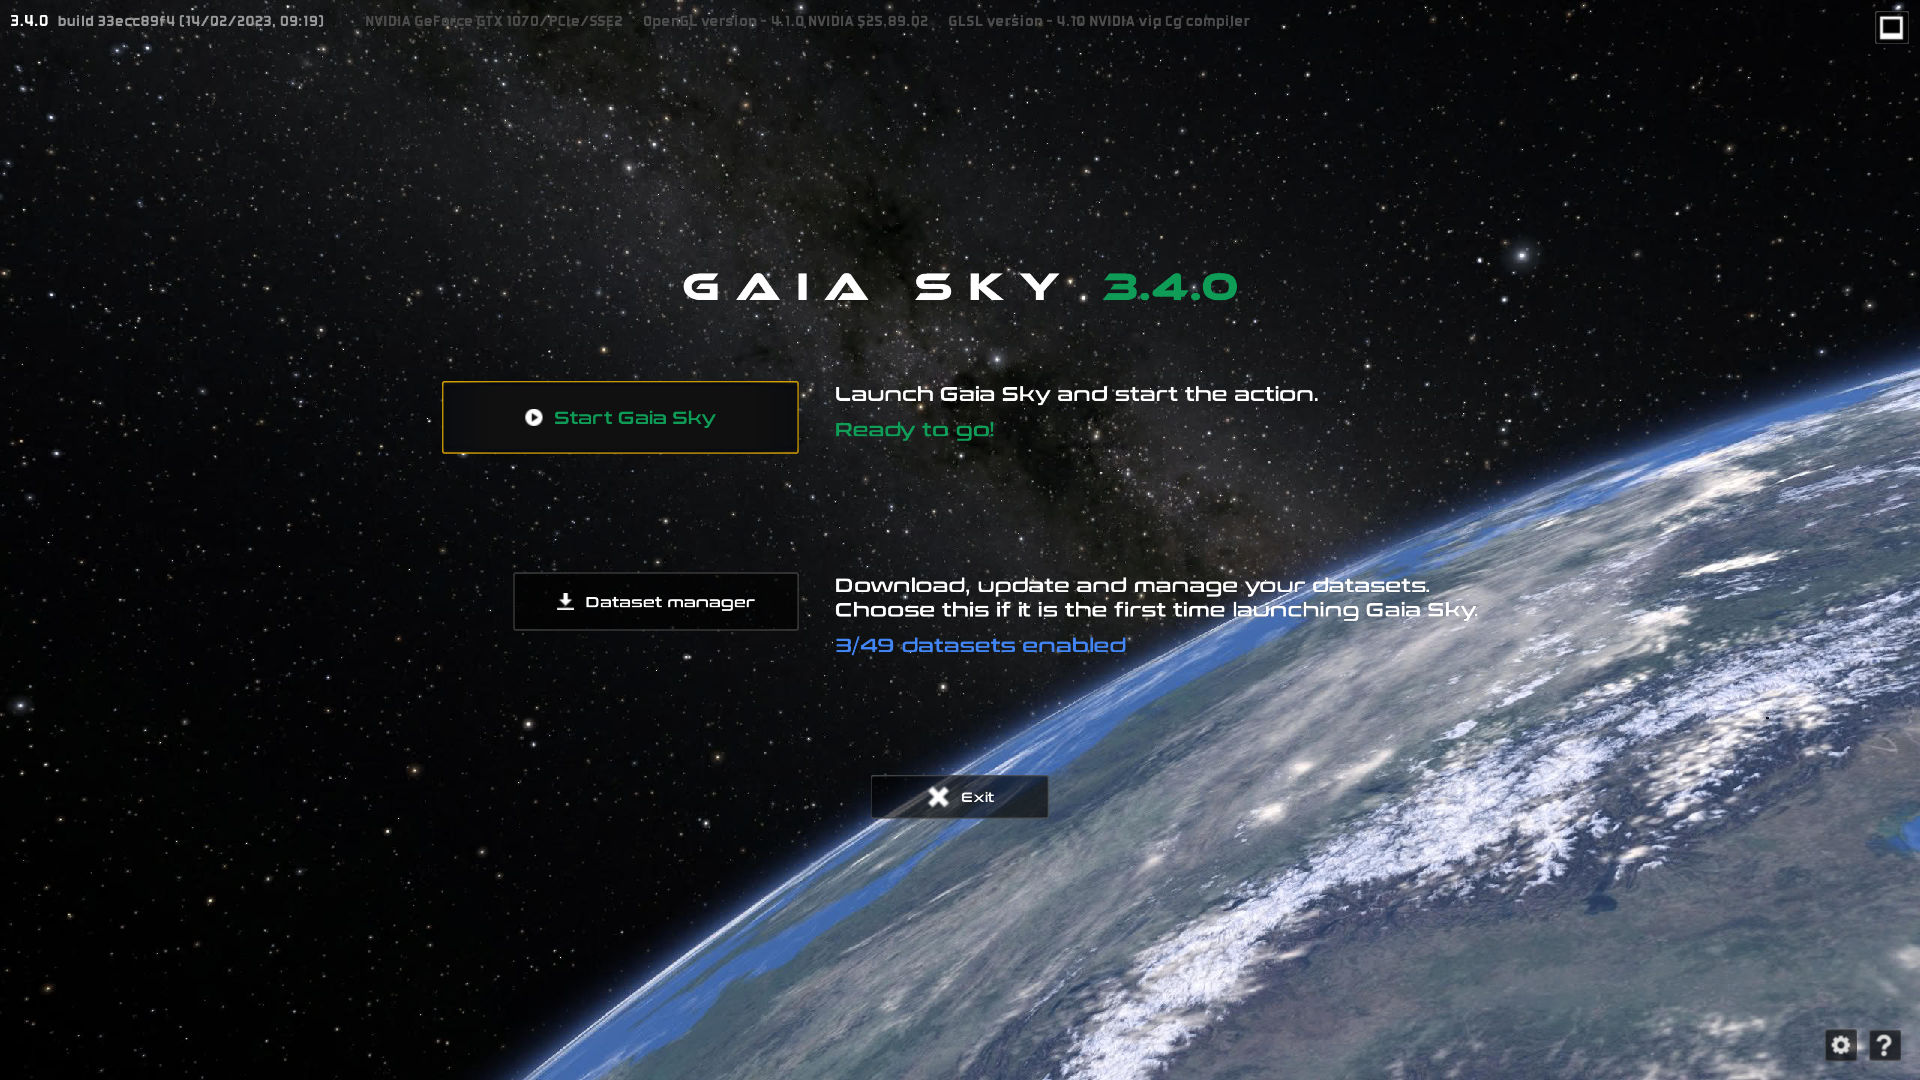 The welcome screen in Gaia Sky 3.4.1